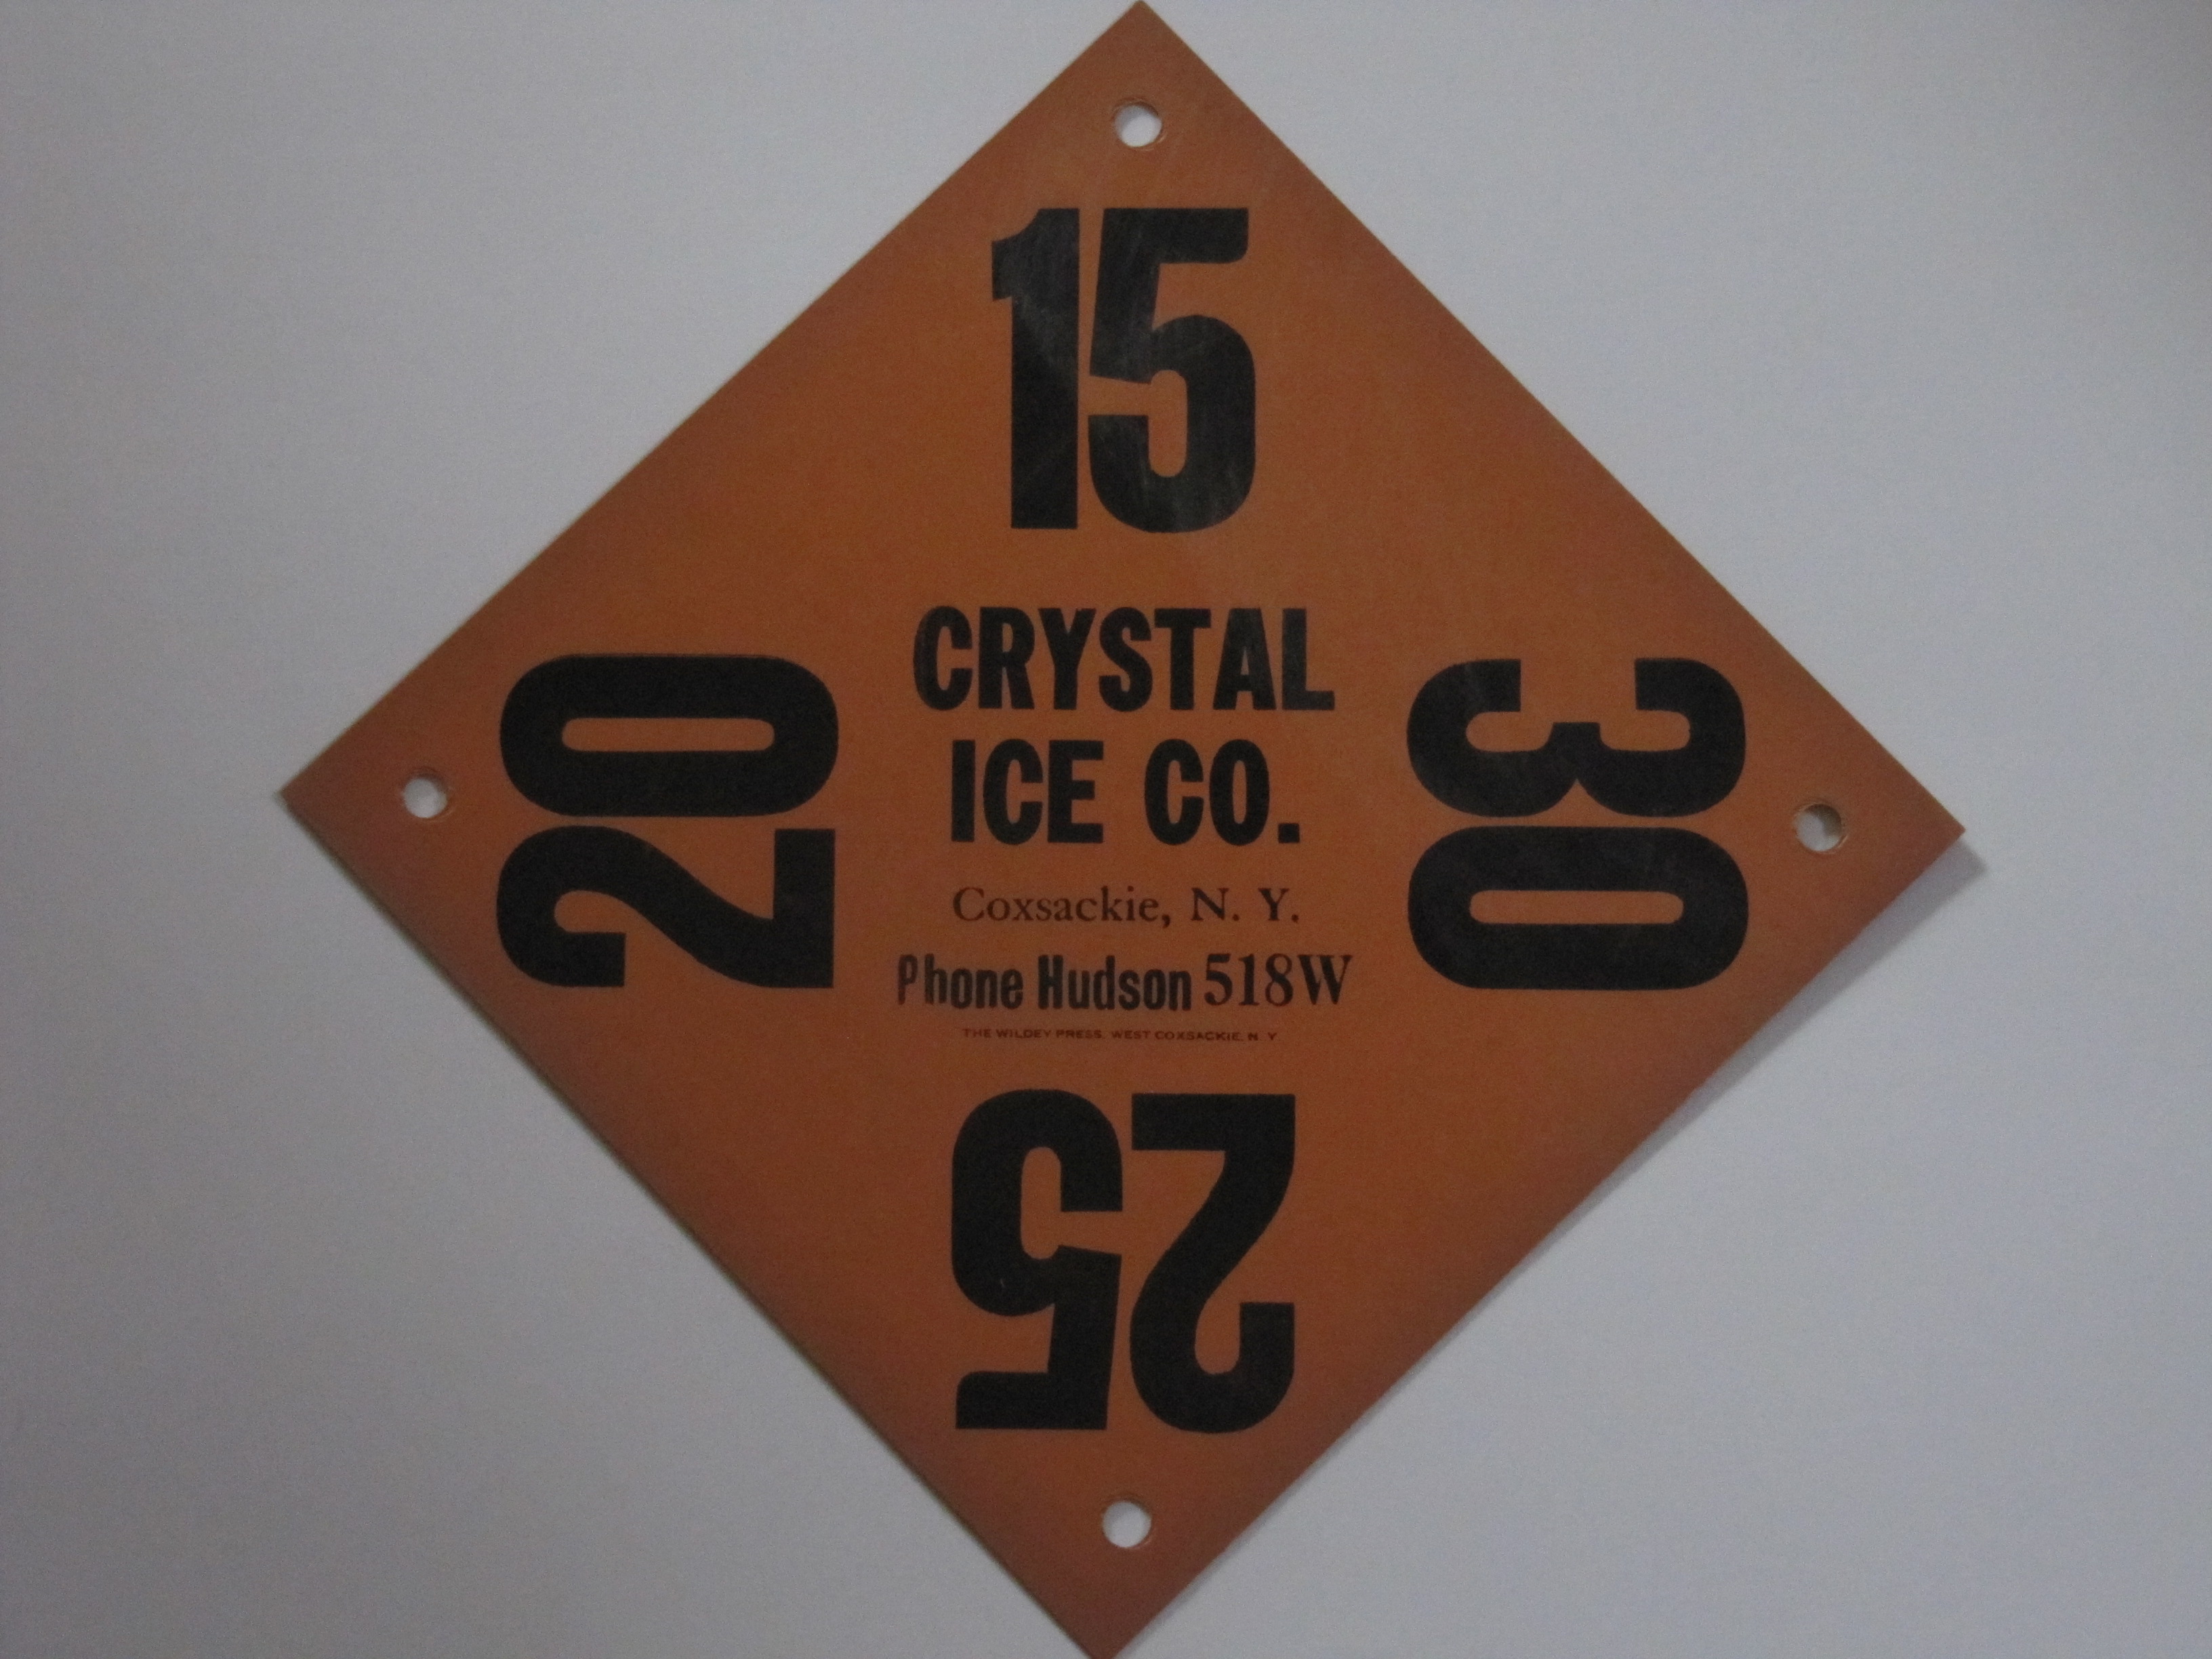 Crystal Ice Co. COXSACKIE, N.Y.